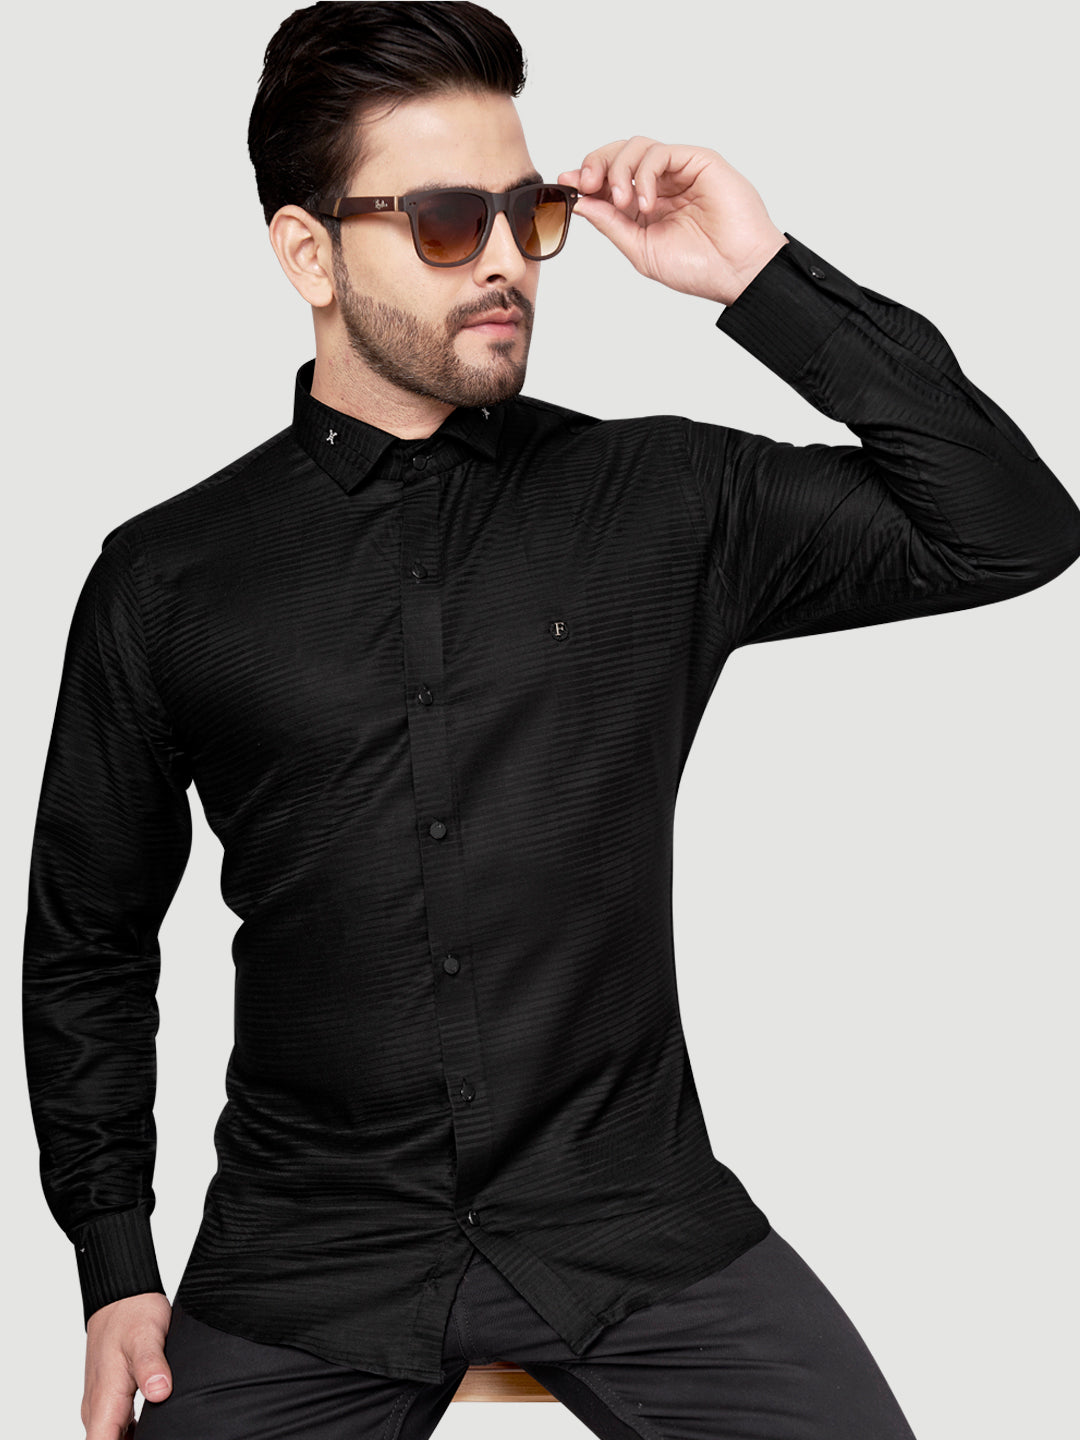 Black and White Shirts Designer Shimmer Shirt with Metal Broach Black